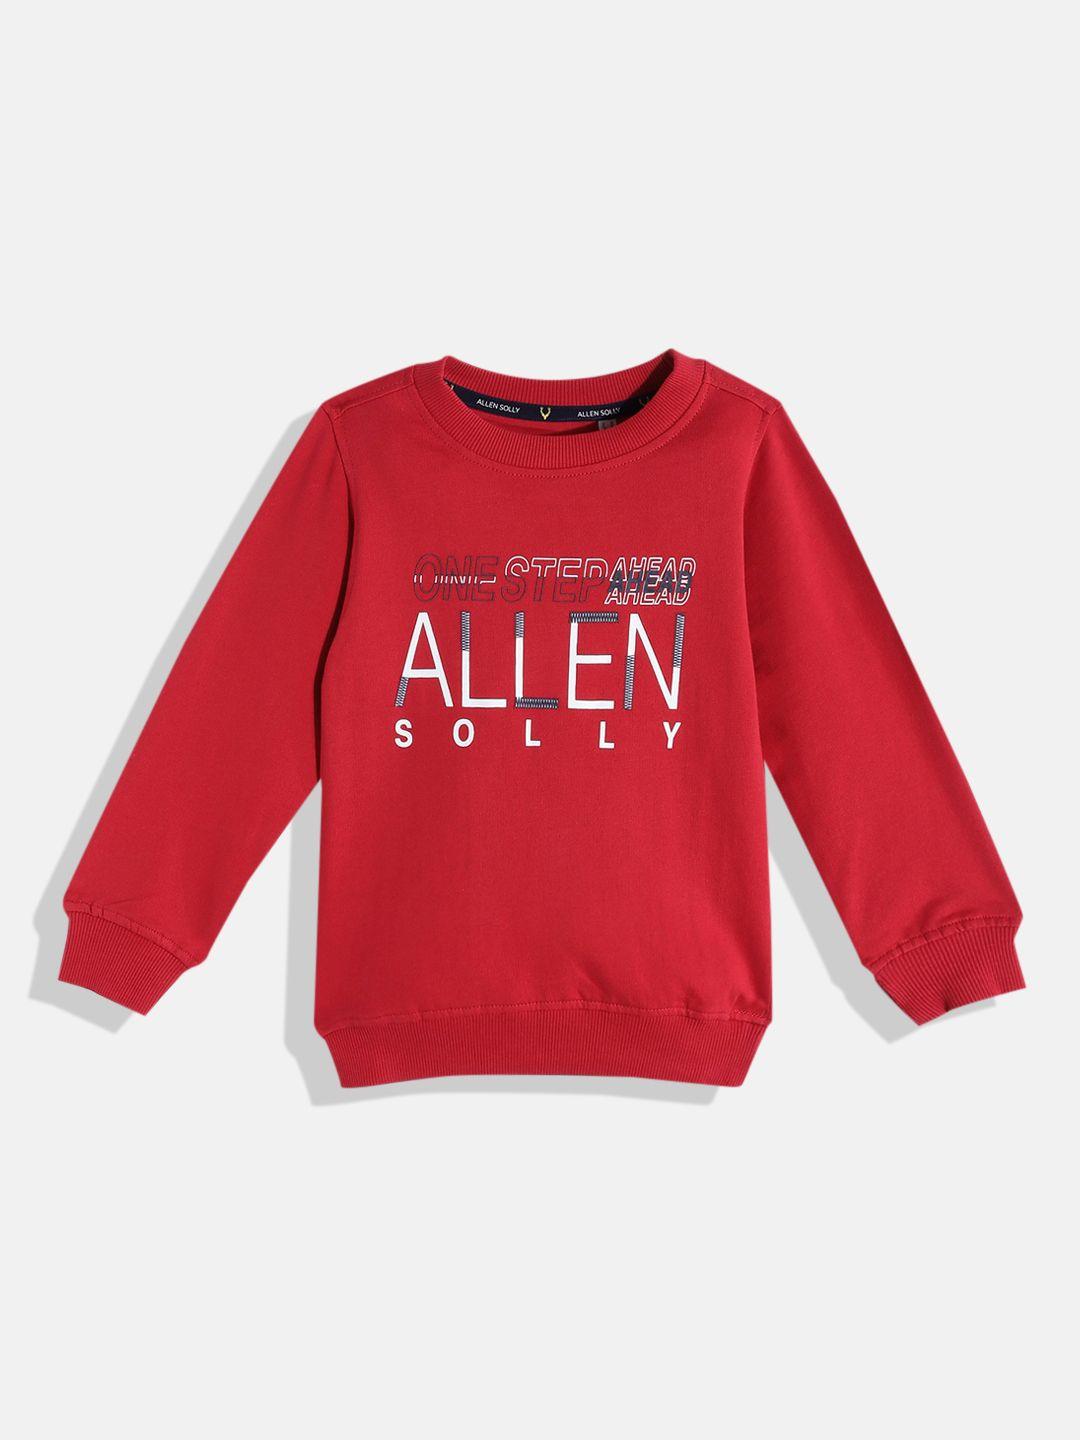 allen solly junior boys red & white pure cotton brand logo printed sweatshirt